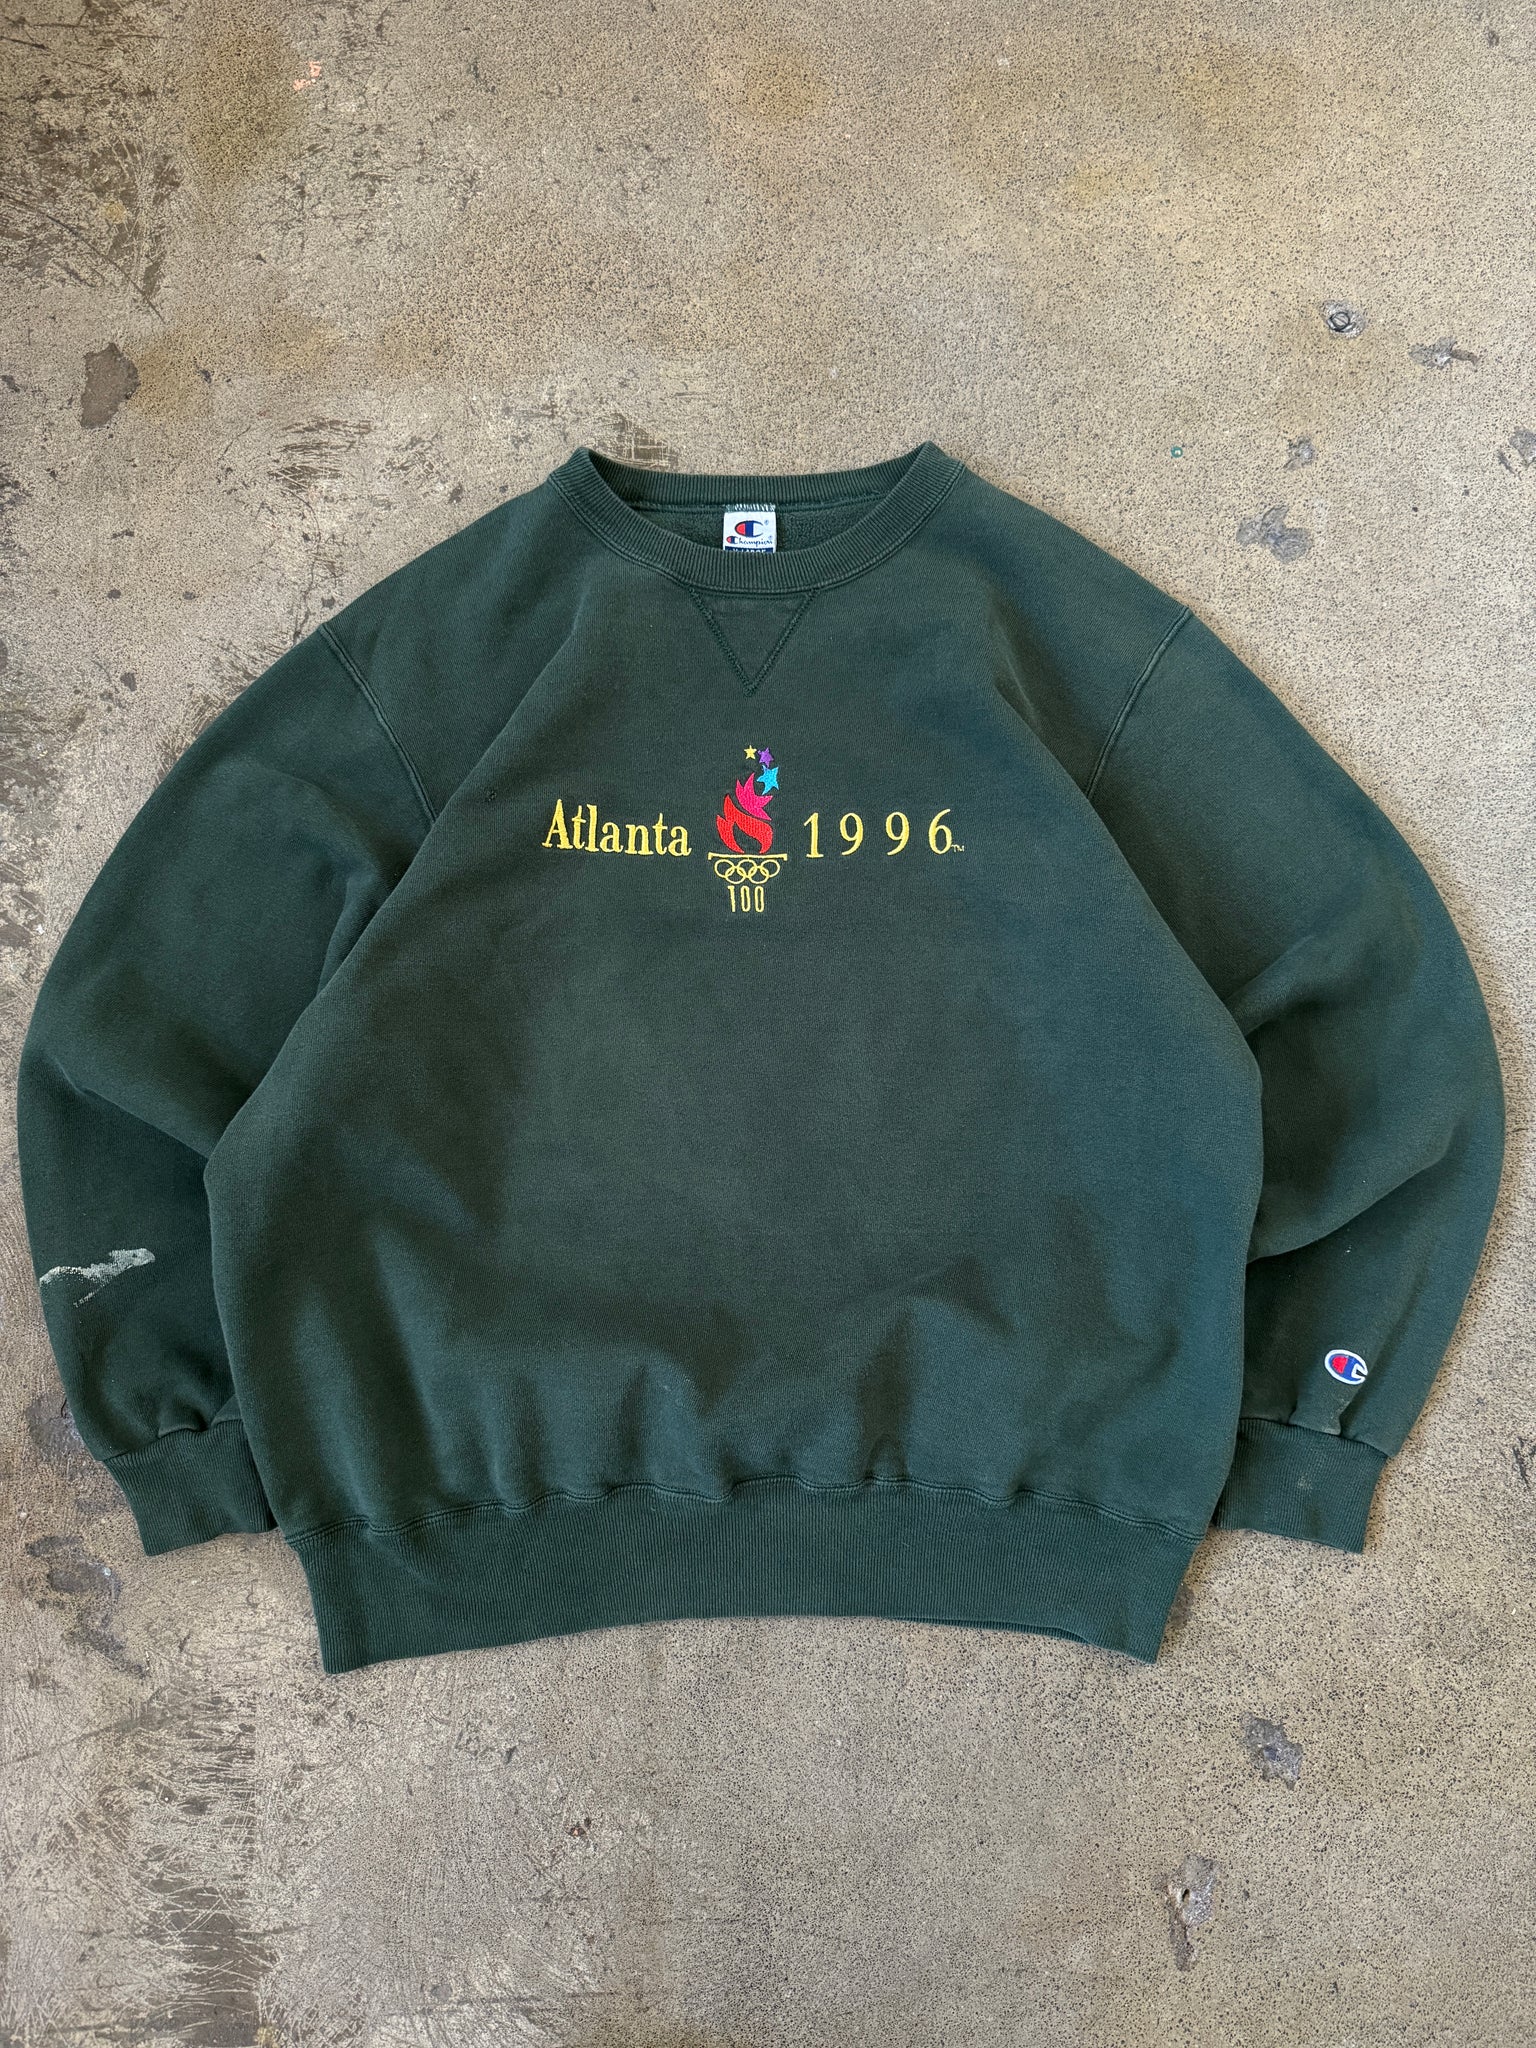 Vintage Champion Atlanta 1996 Olympics Sweatshirt (L)